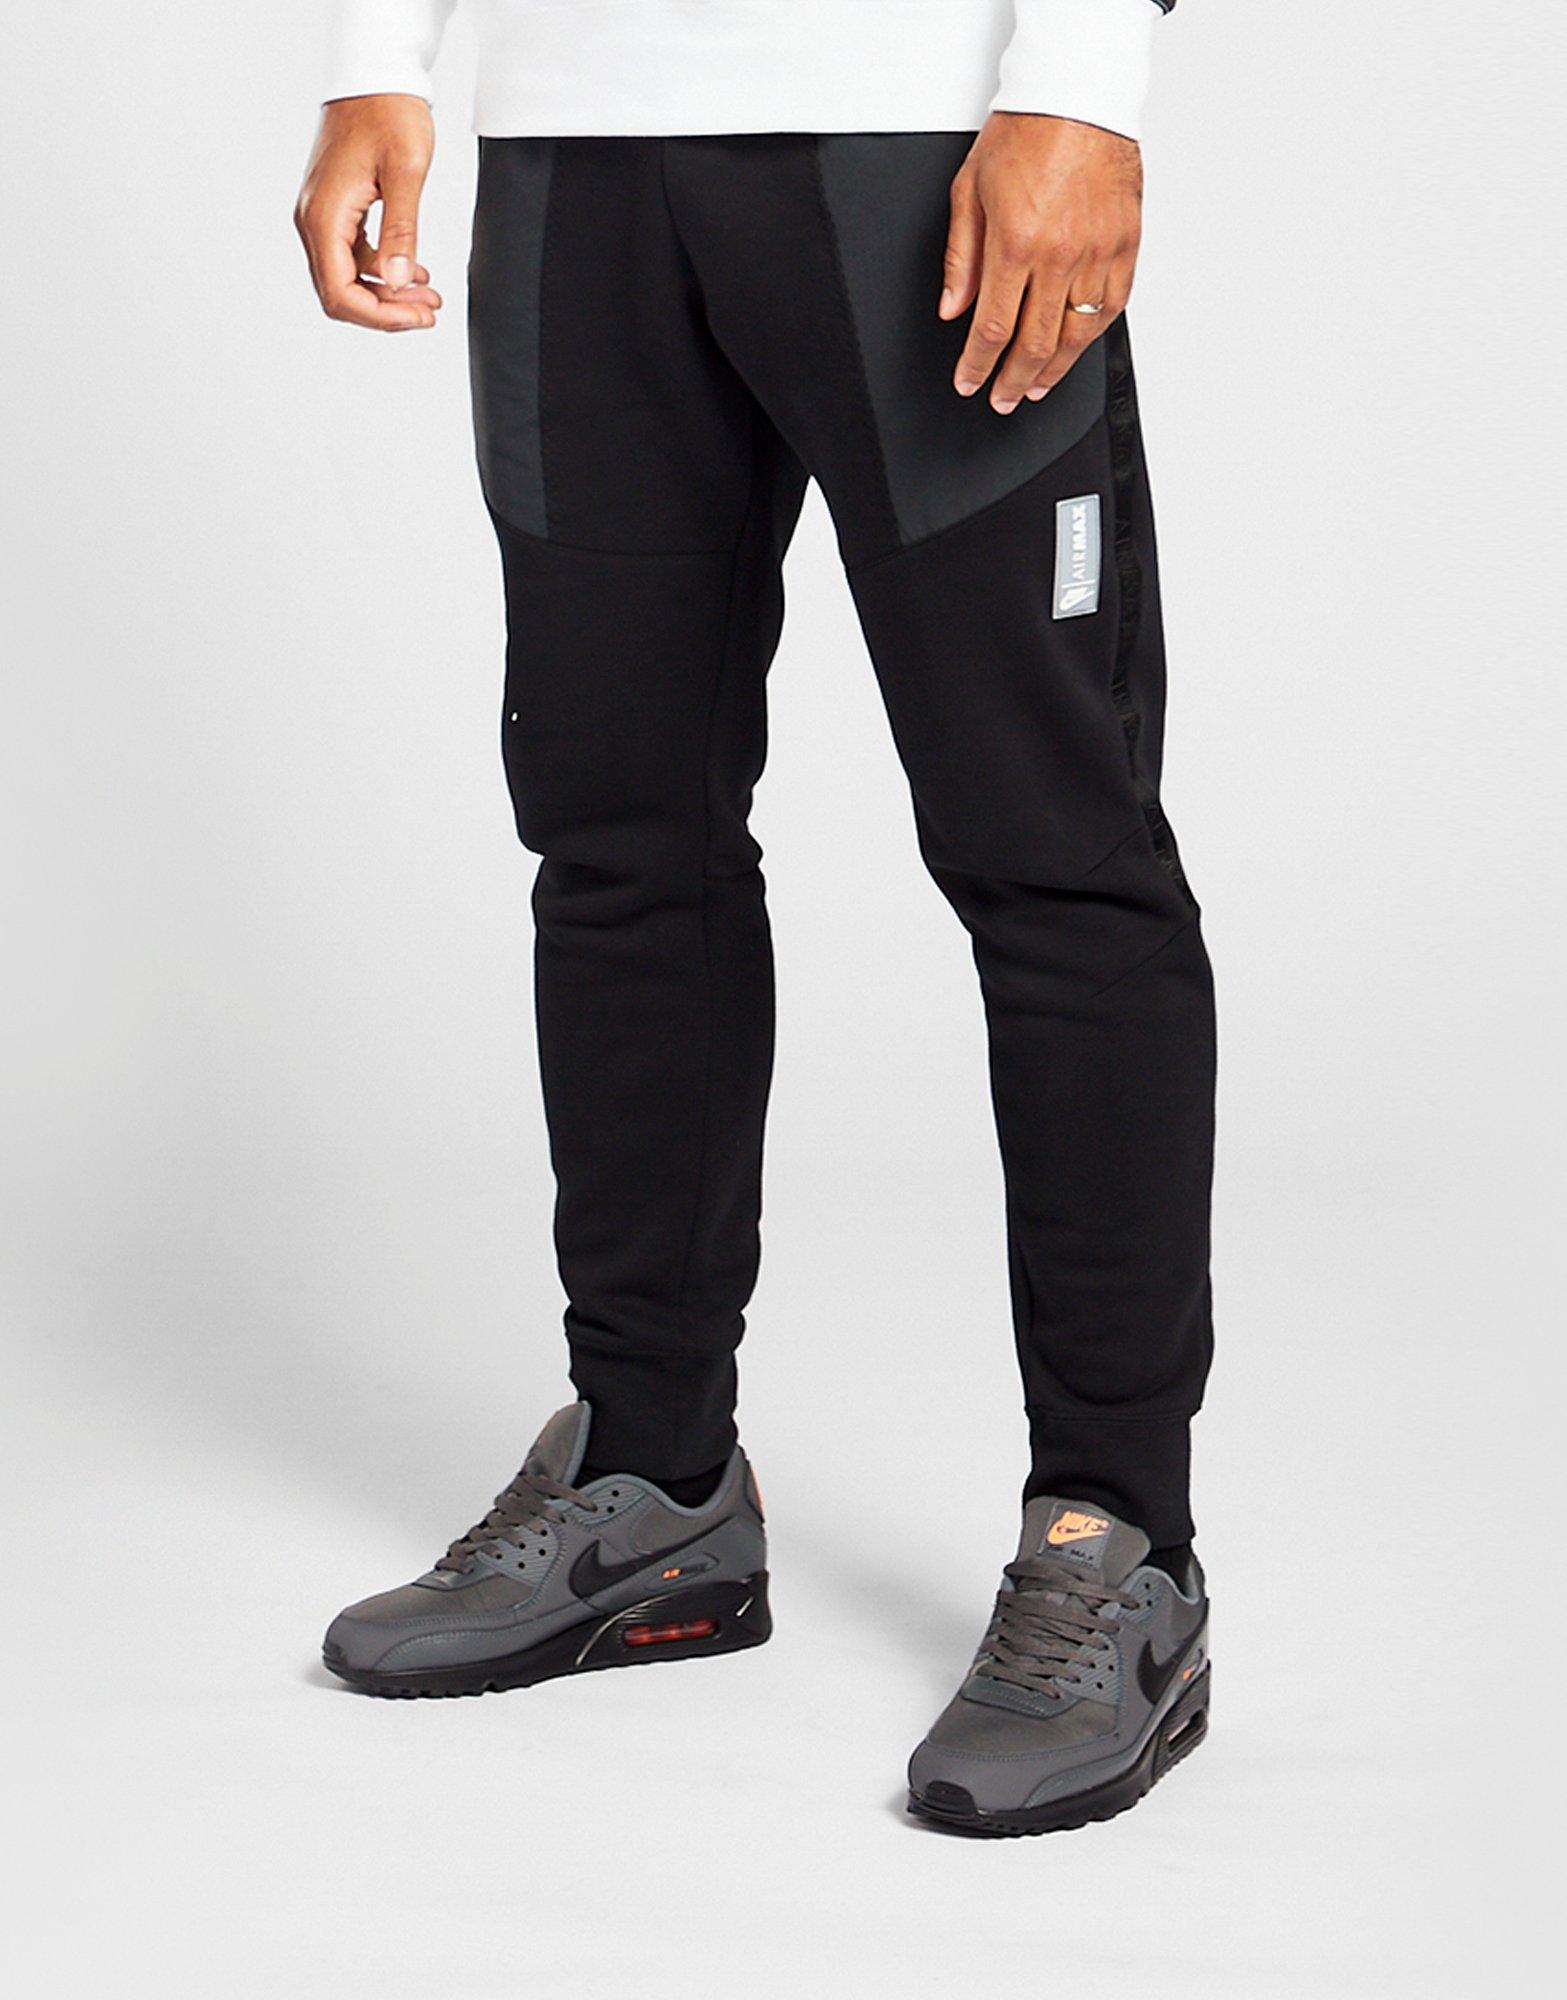 Compra Nike pantalón de chándal Air Max